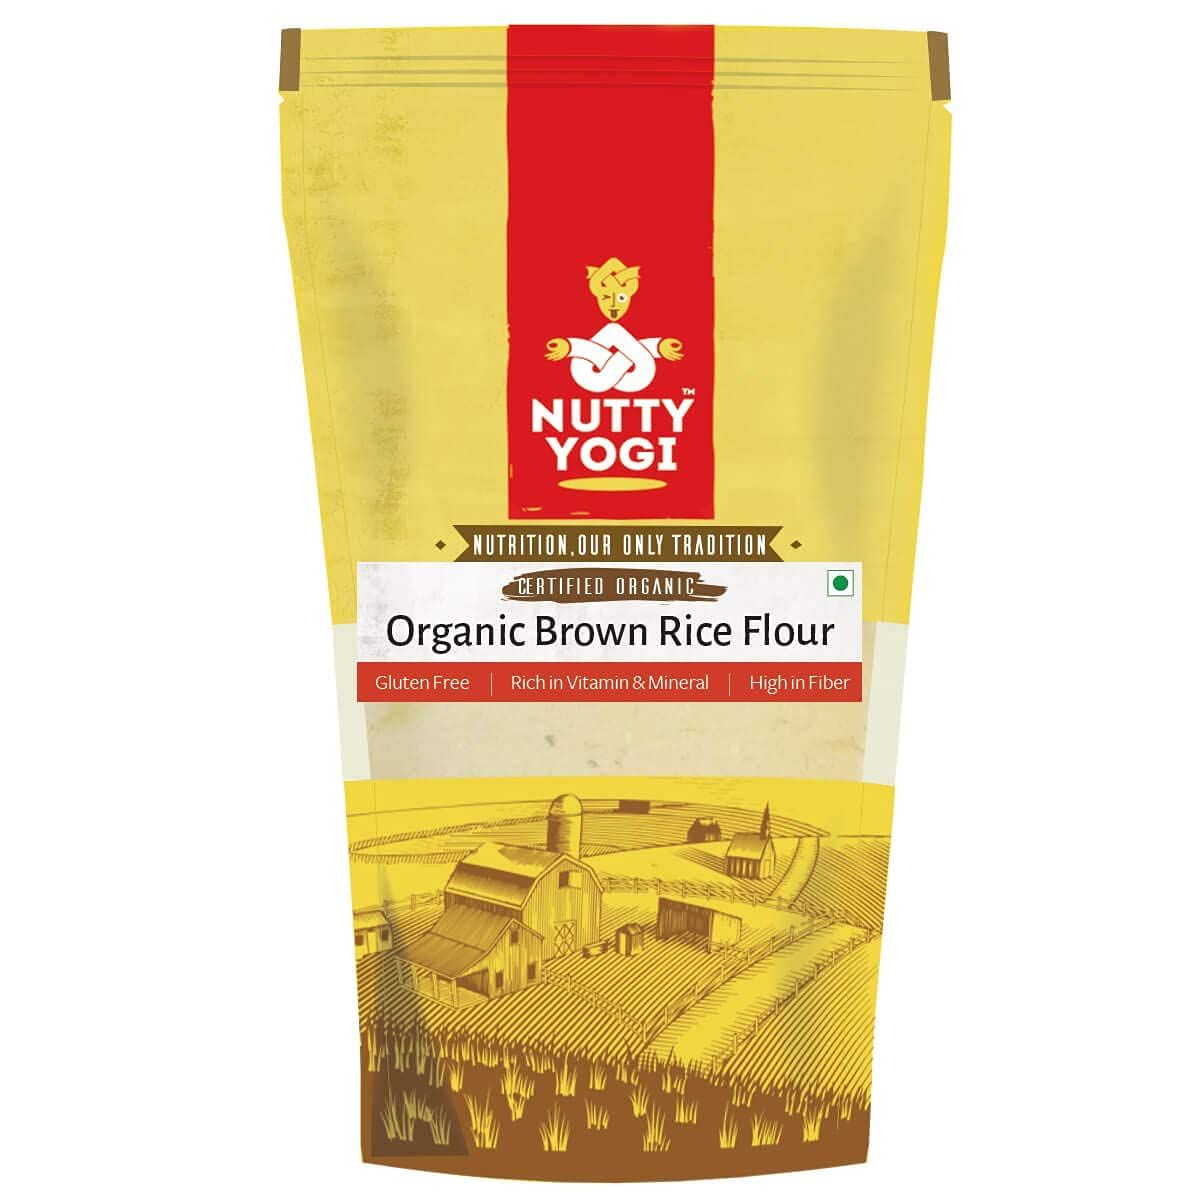 Nutty Yogi Certified Gluten Free Organic Brown Rice Flour Image